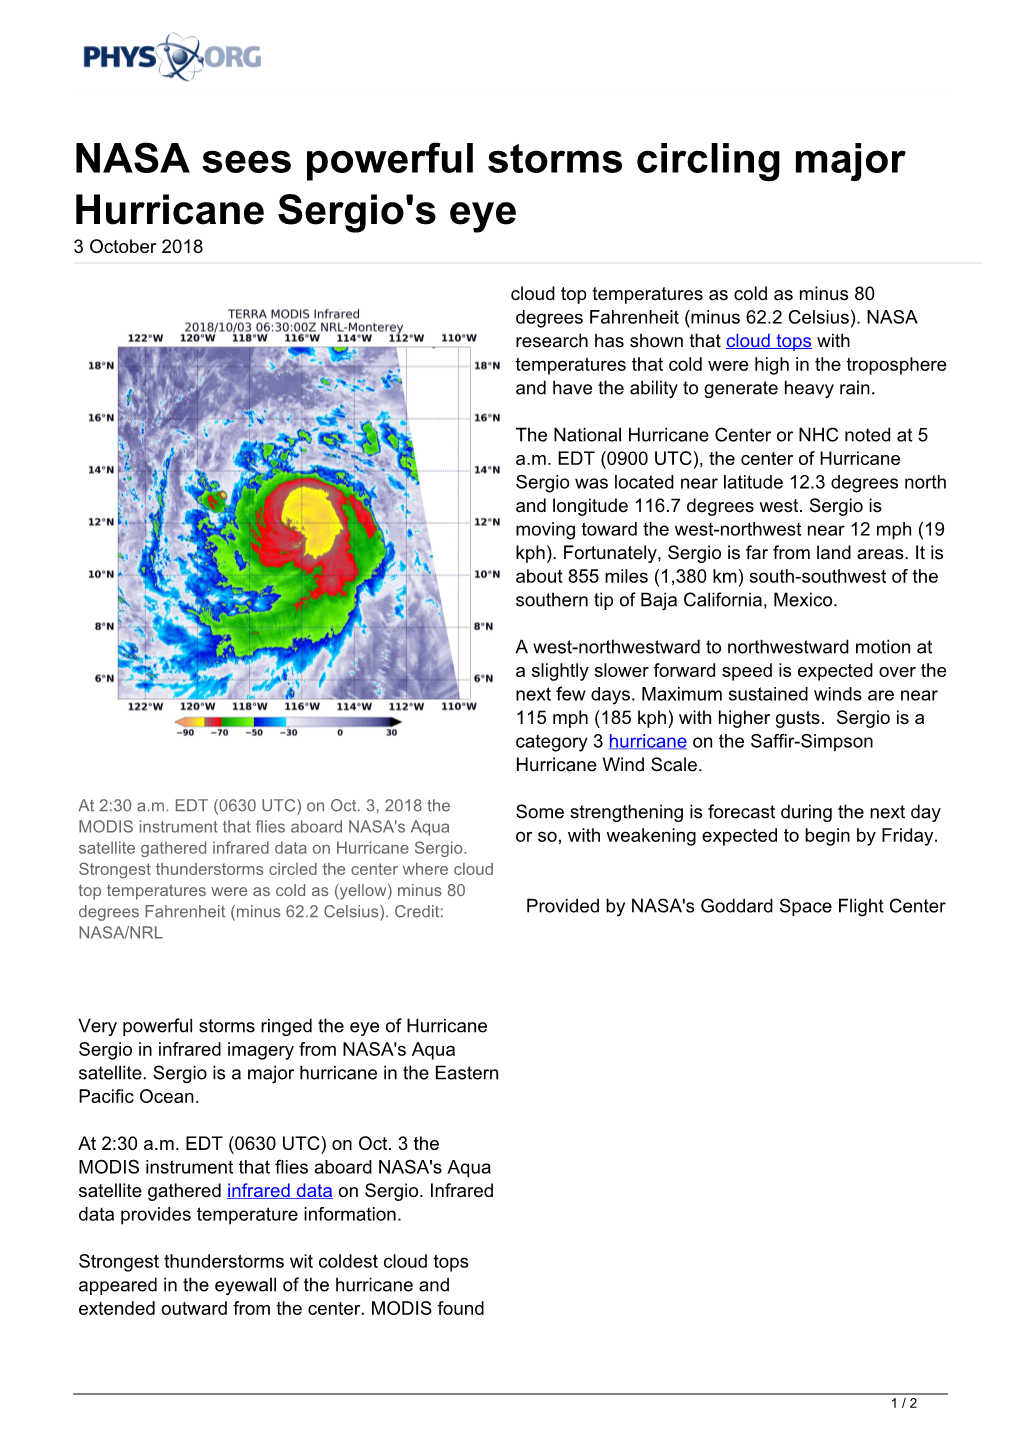 NASA Sees Powerful Storms Circling Major Hurricane Sergio's Eye 3 October 2018